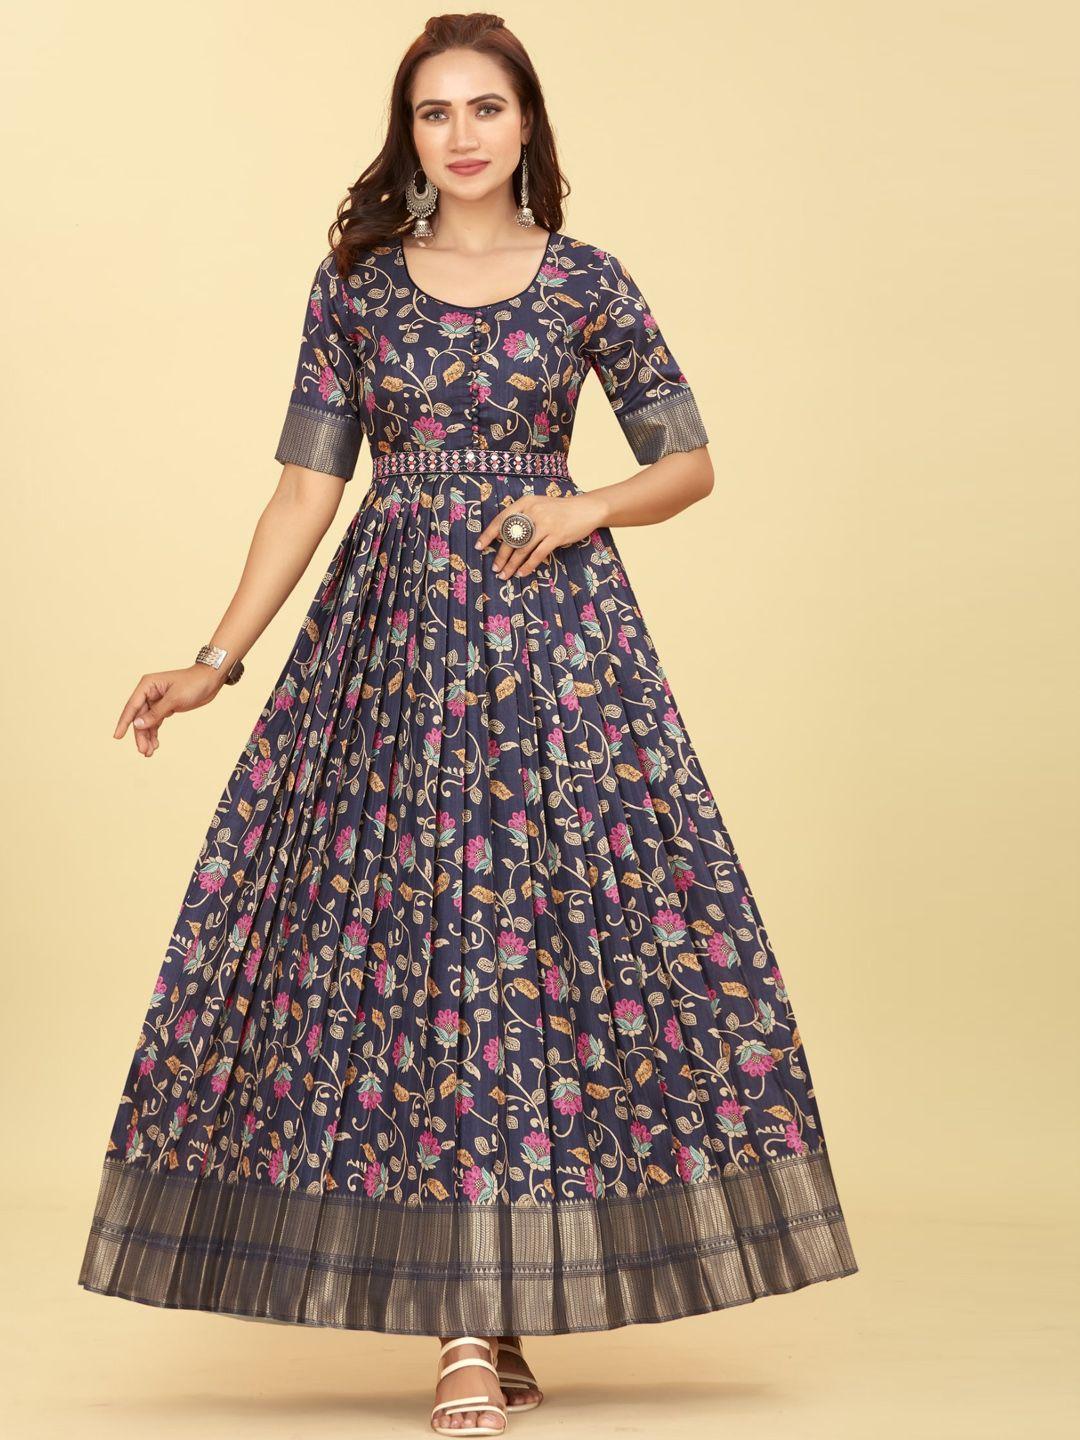 chansi floral printed fit & flared maxi ethnic dress comes with embellished belt